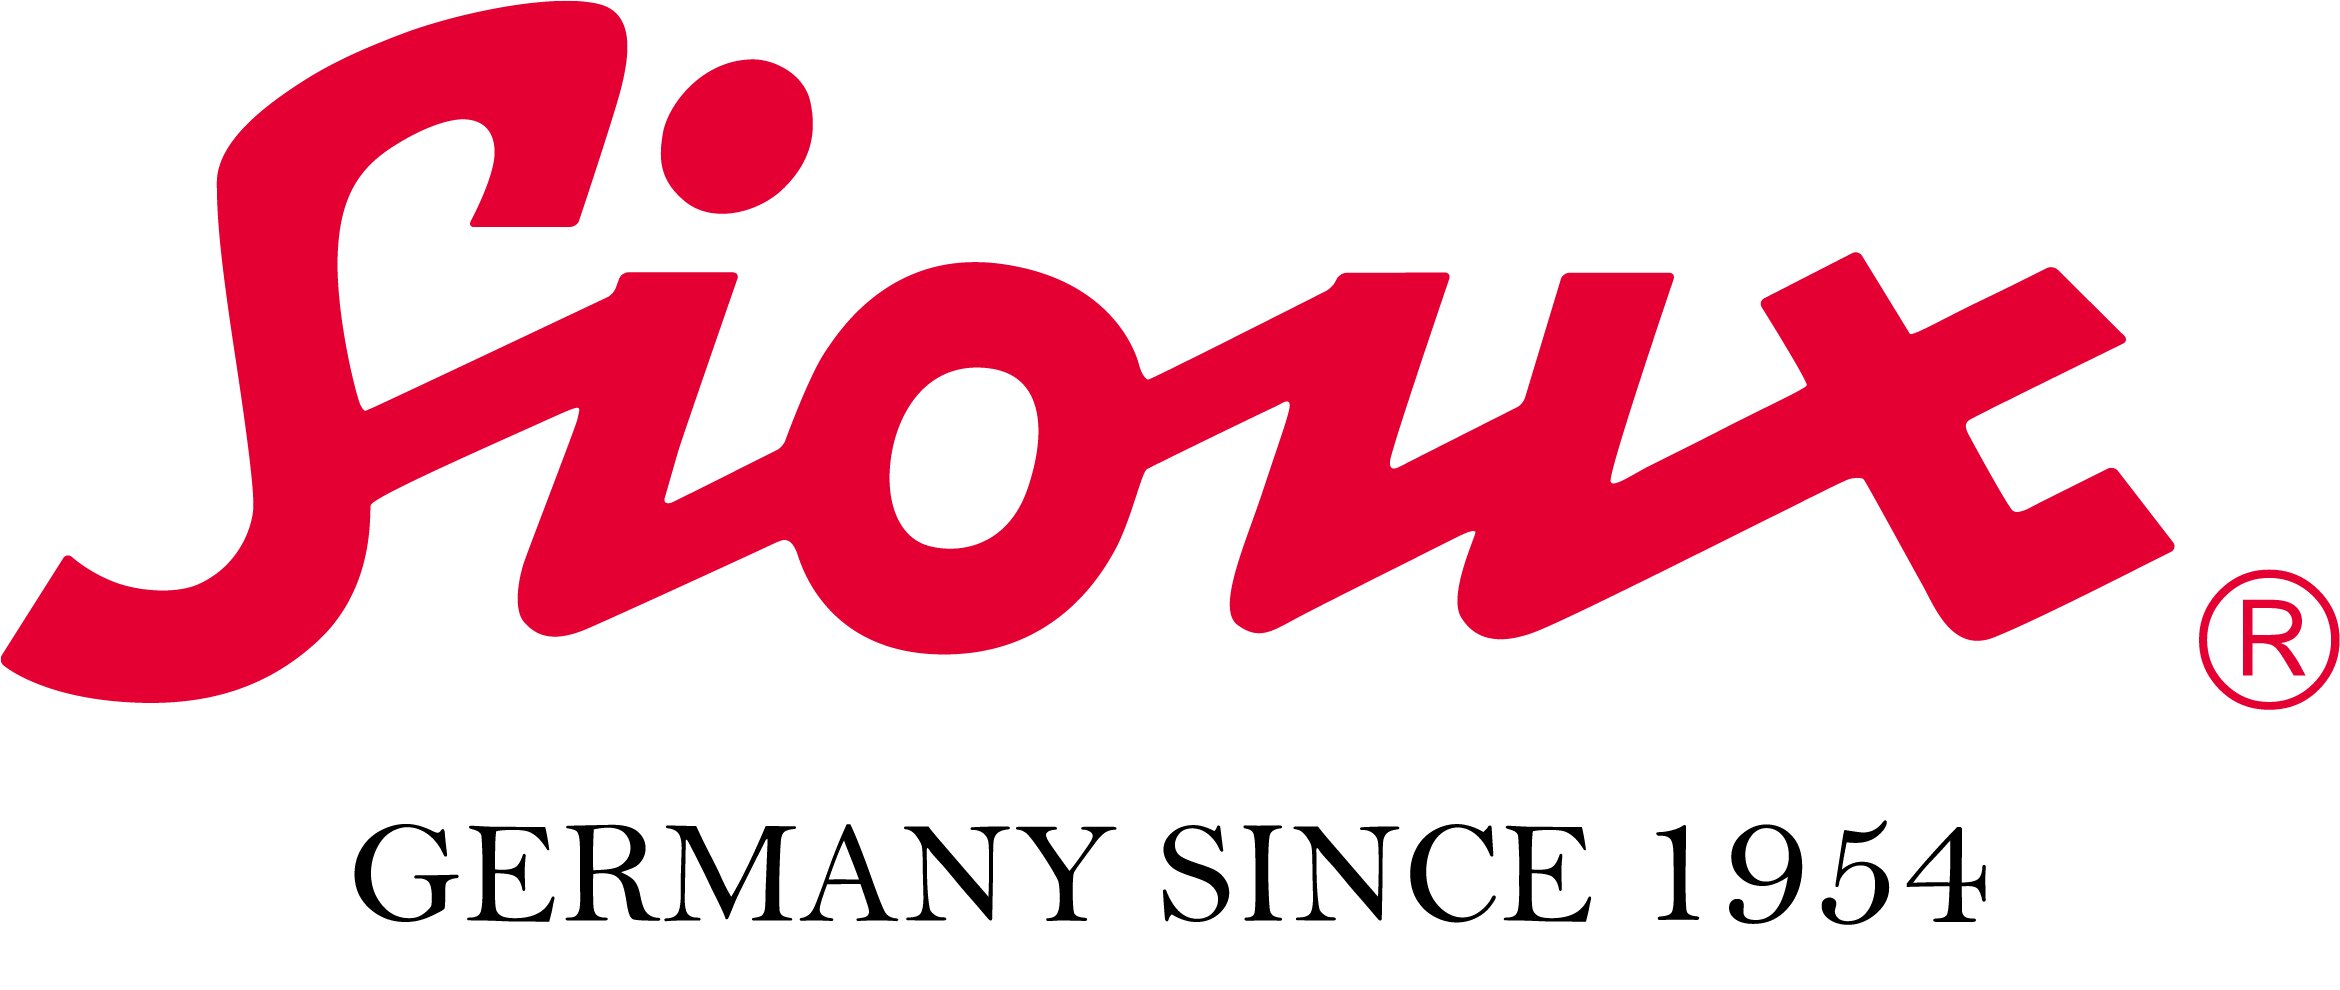 Logo-Sioux-Germany-since-1954.jpg